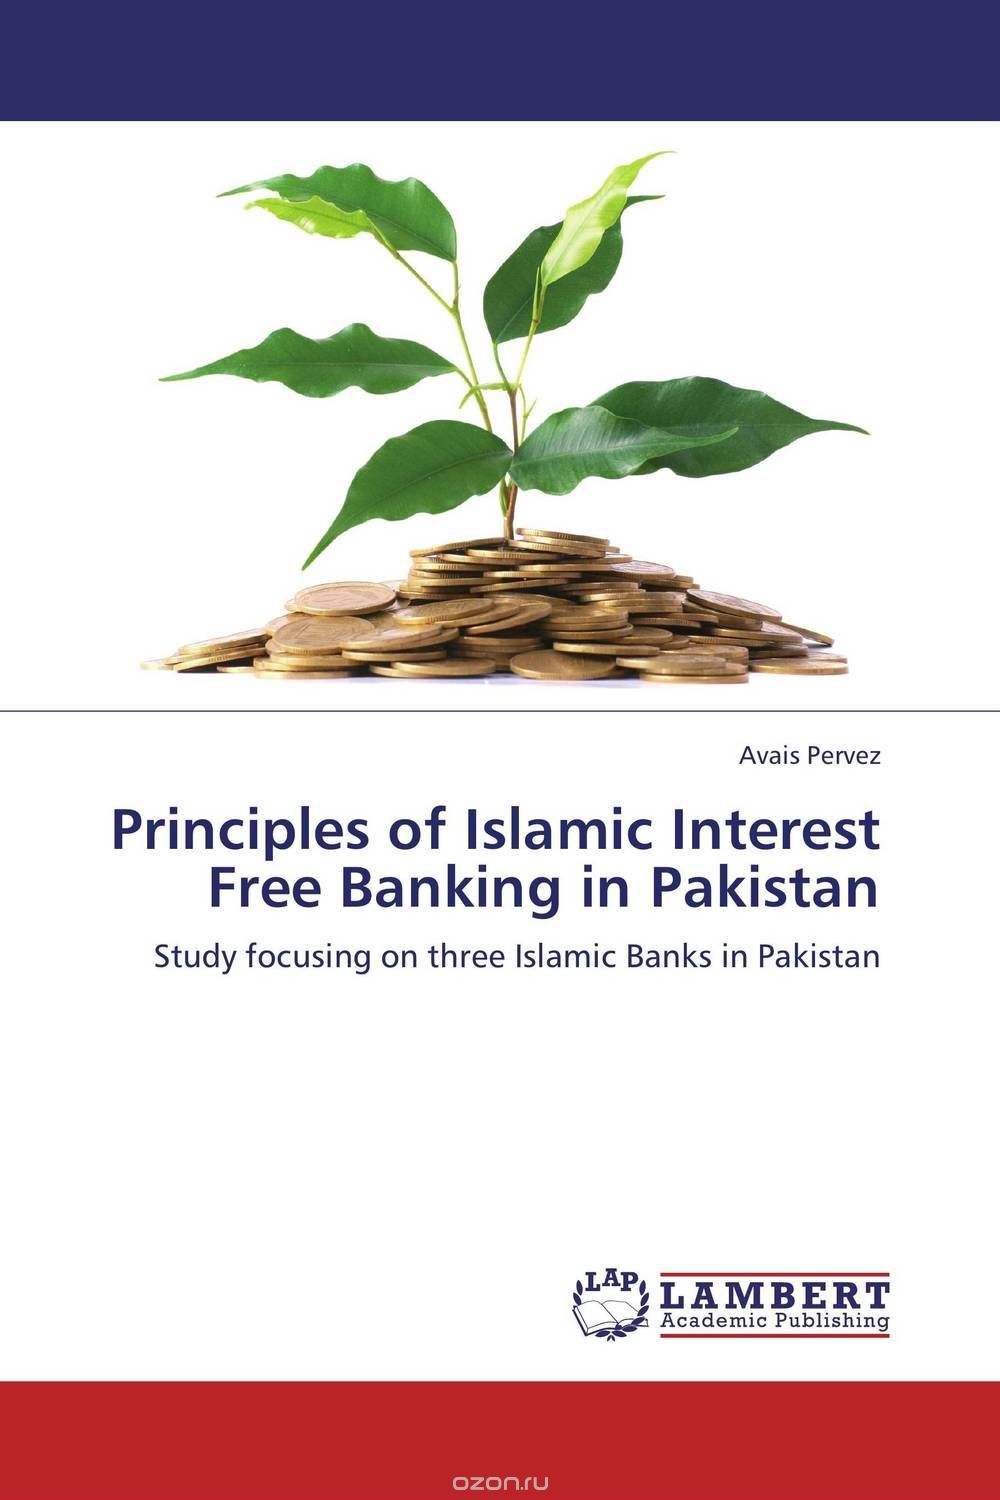 Скачать книгу "Principles of Islamic Interest Free Banking in Pakistan"